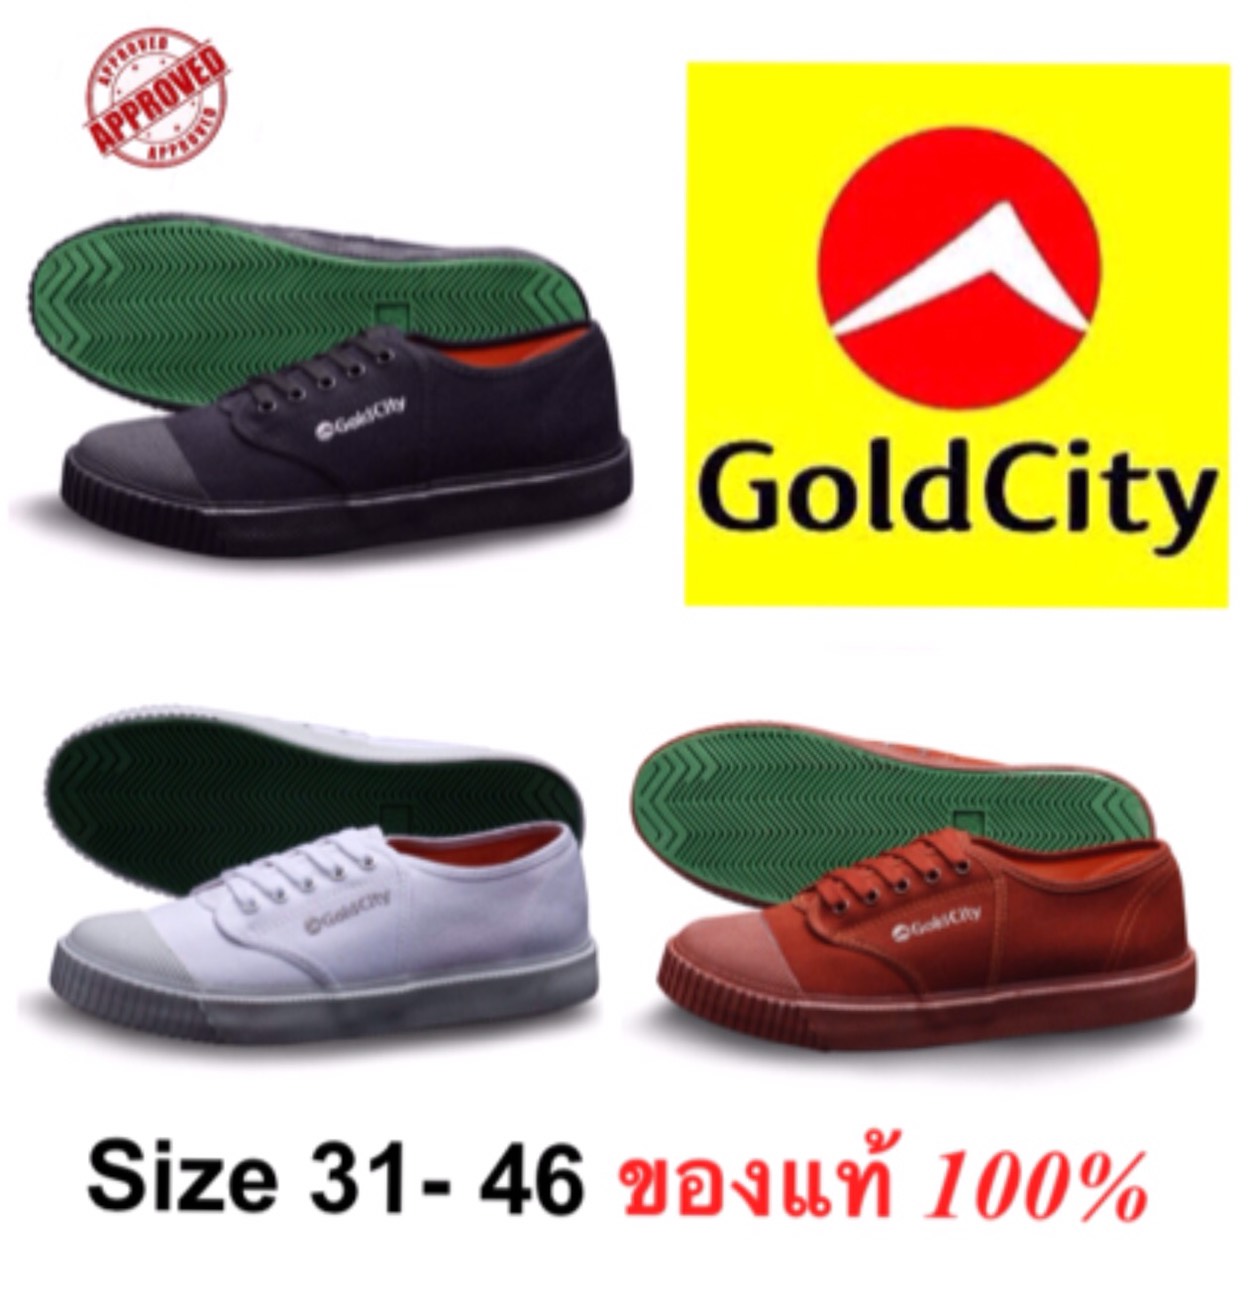 Goldcity รุ่น205s ไซส์ 31-46 รองเท้าใบ โกลซิตี้